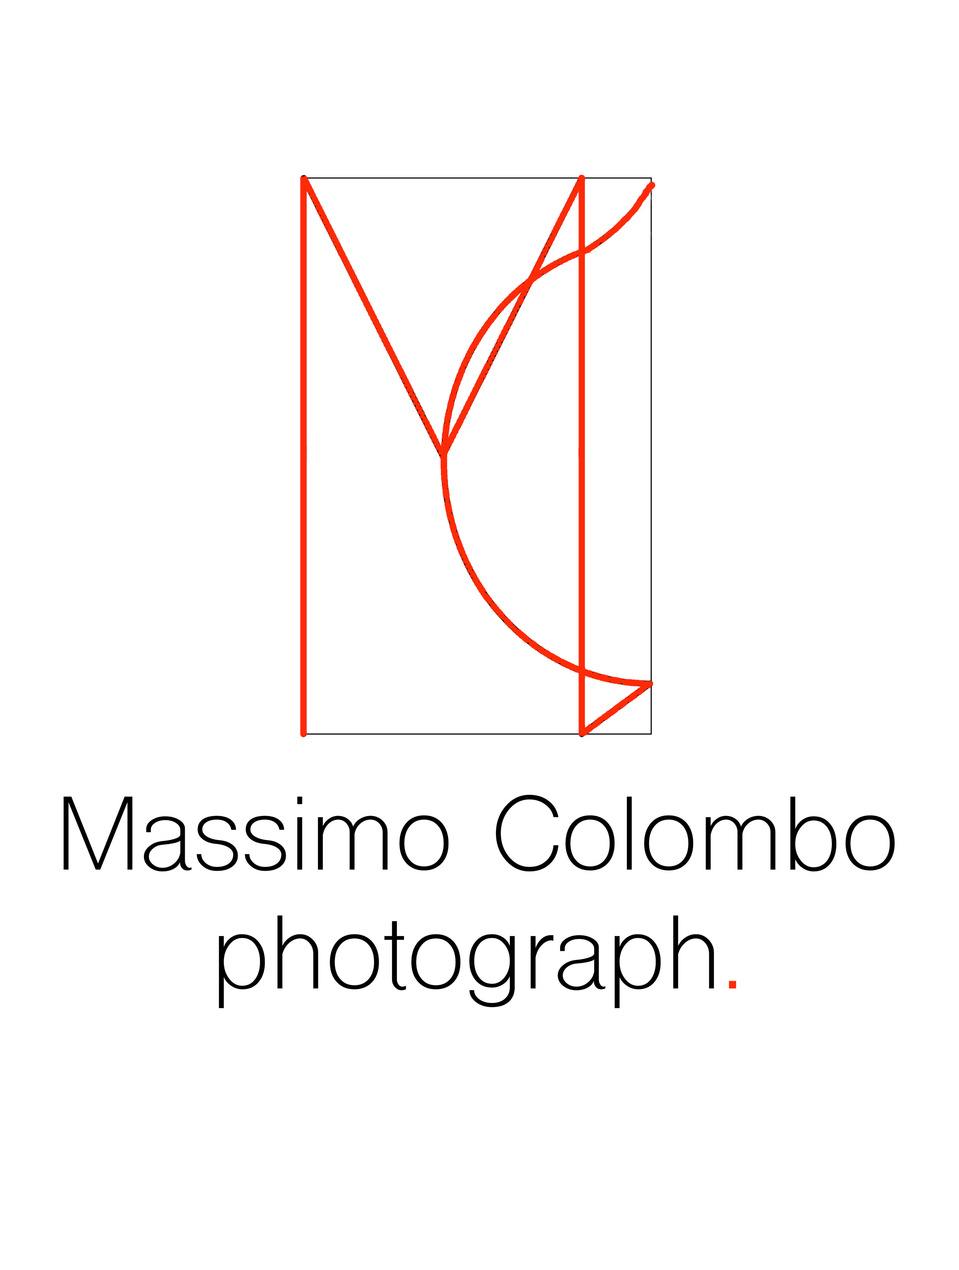 Massimo Colombo's Portfolio